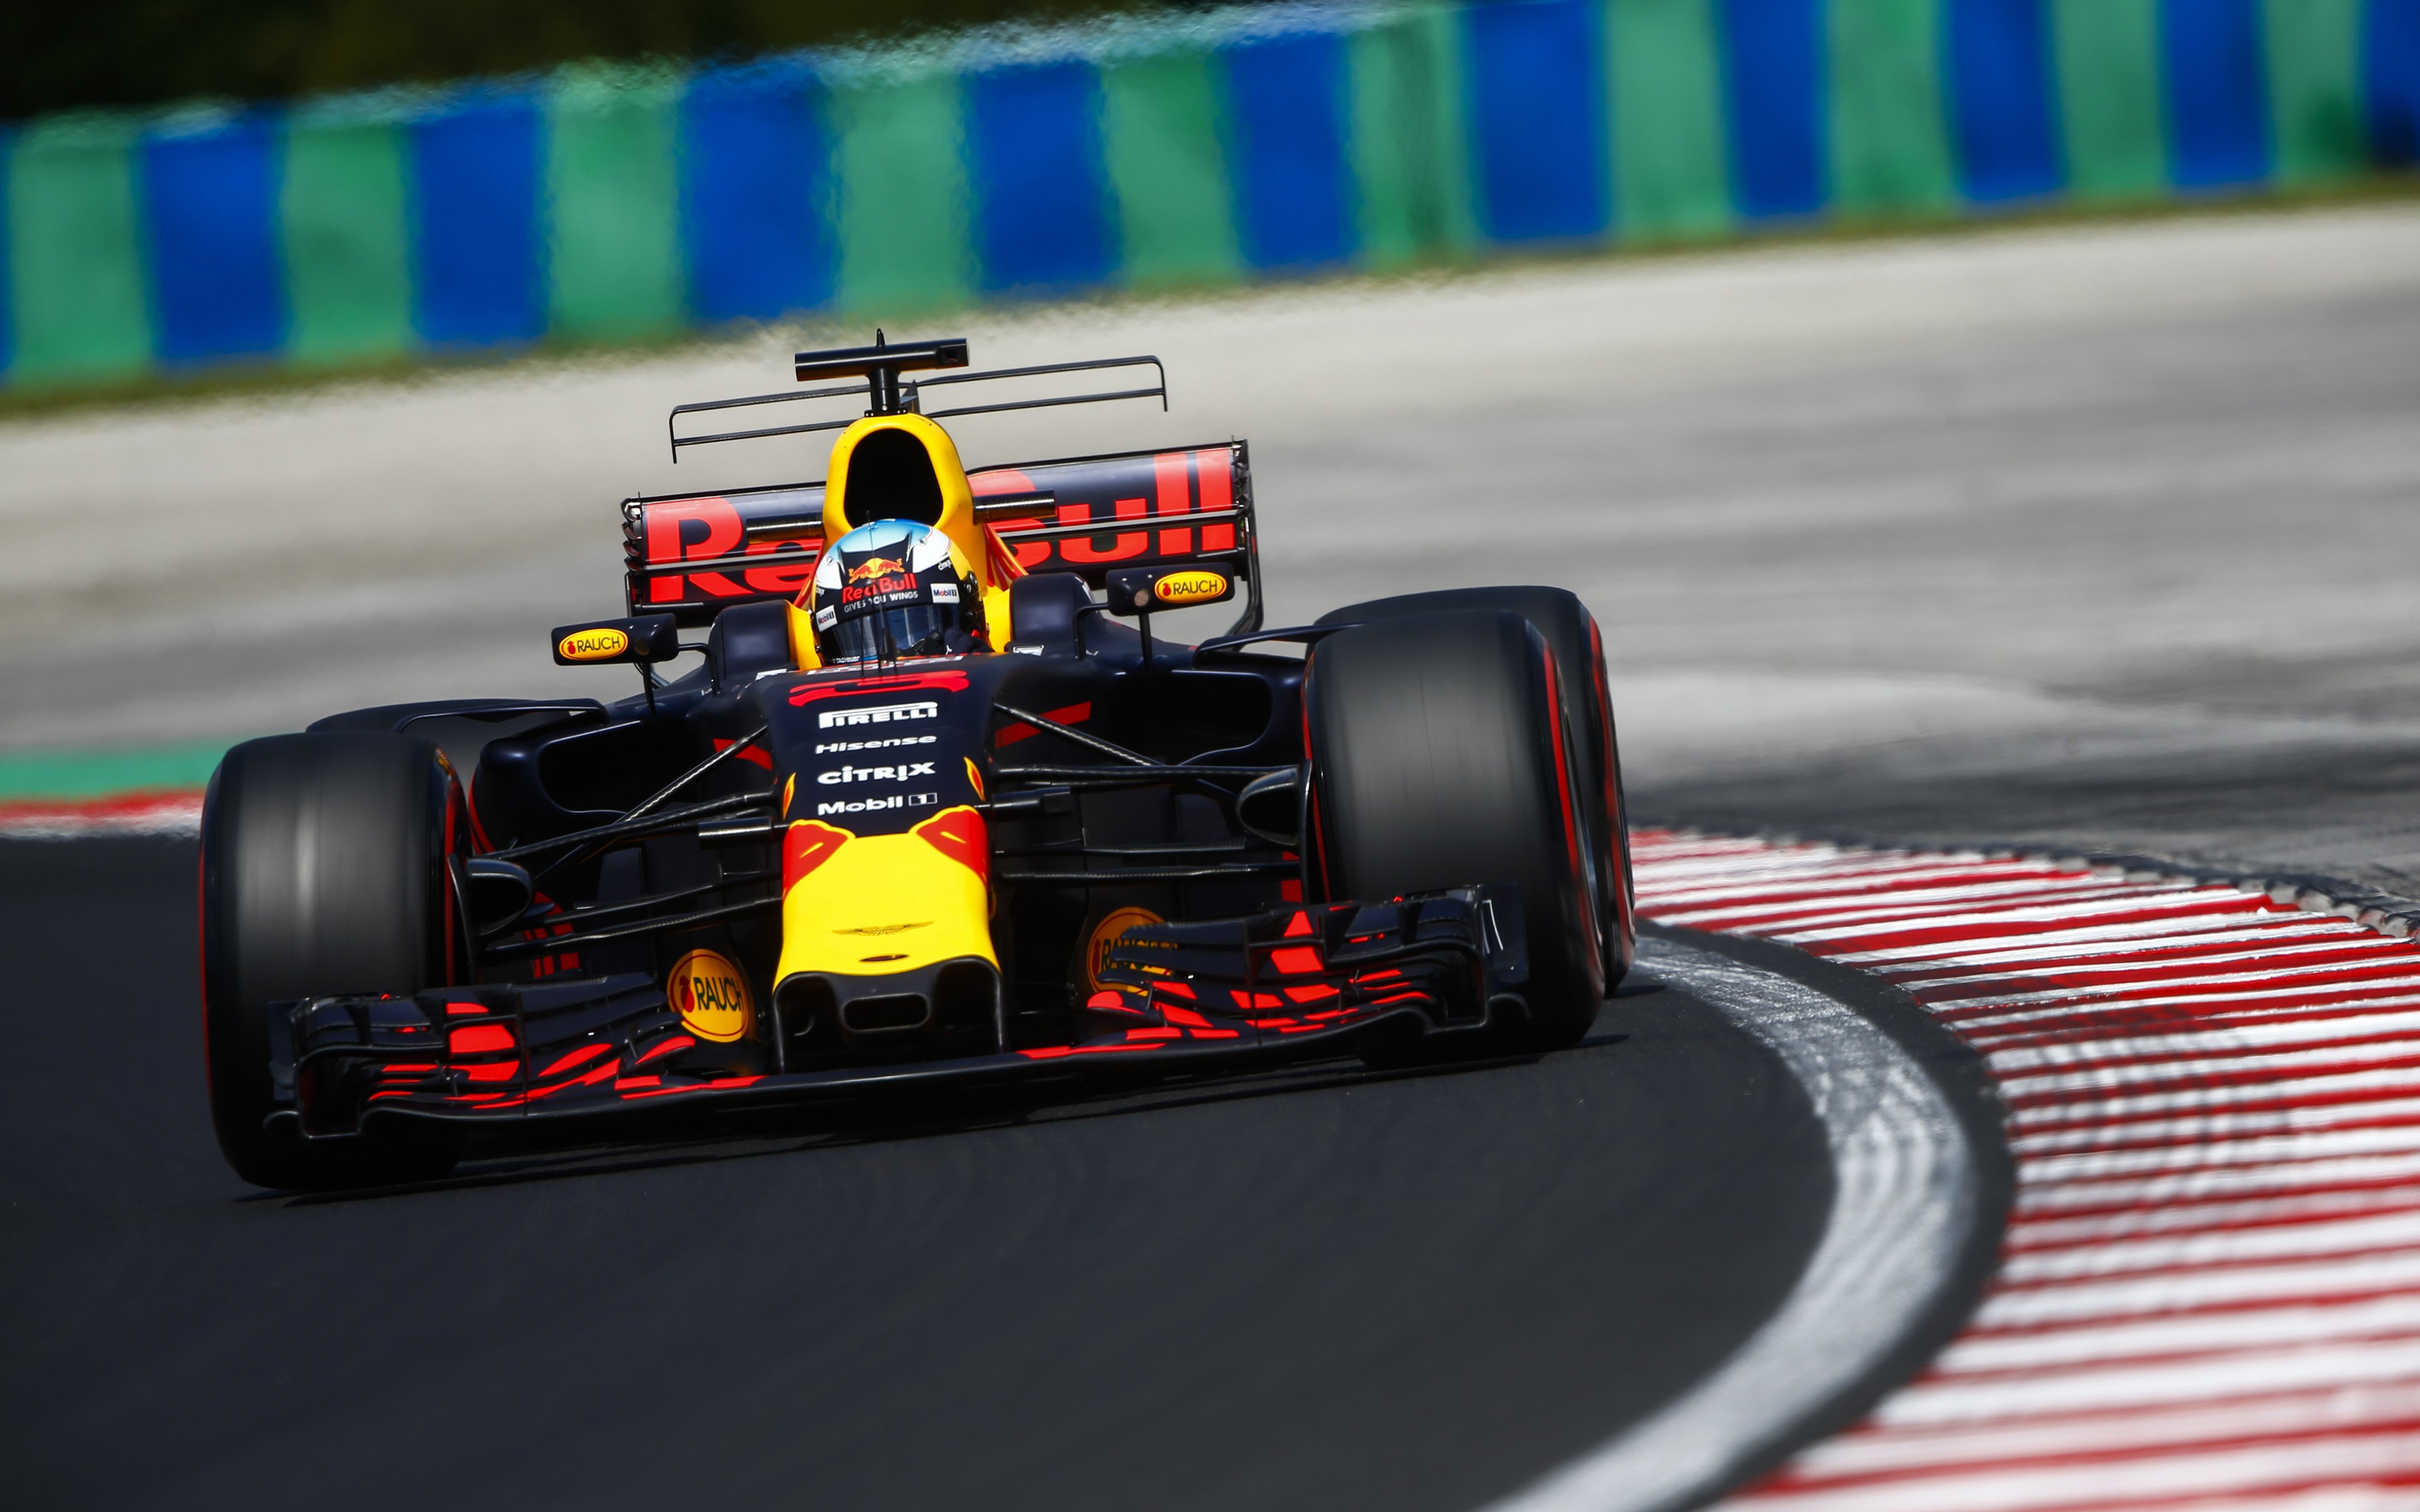 Download wallpapers 4k, Daniel Ricciardo, Formula One, F1, Red Bull